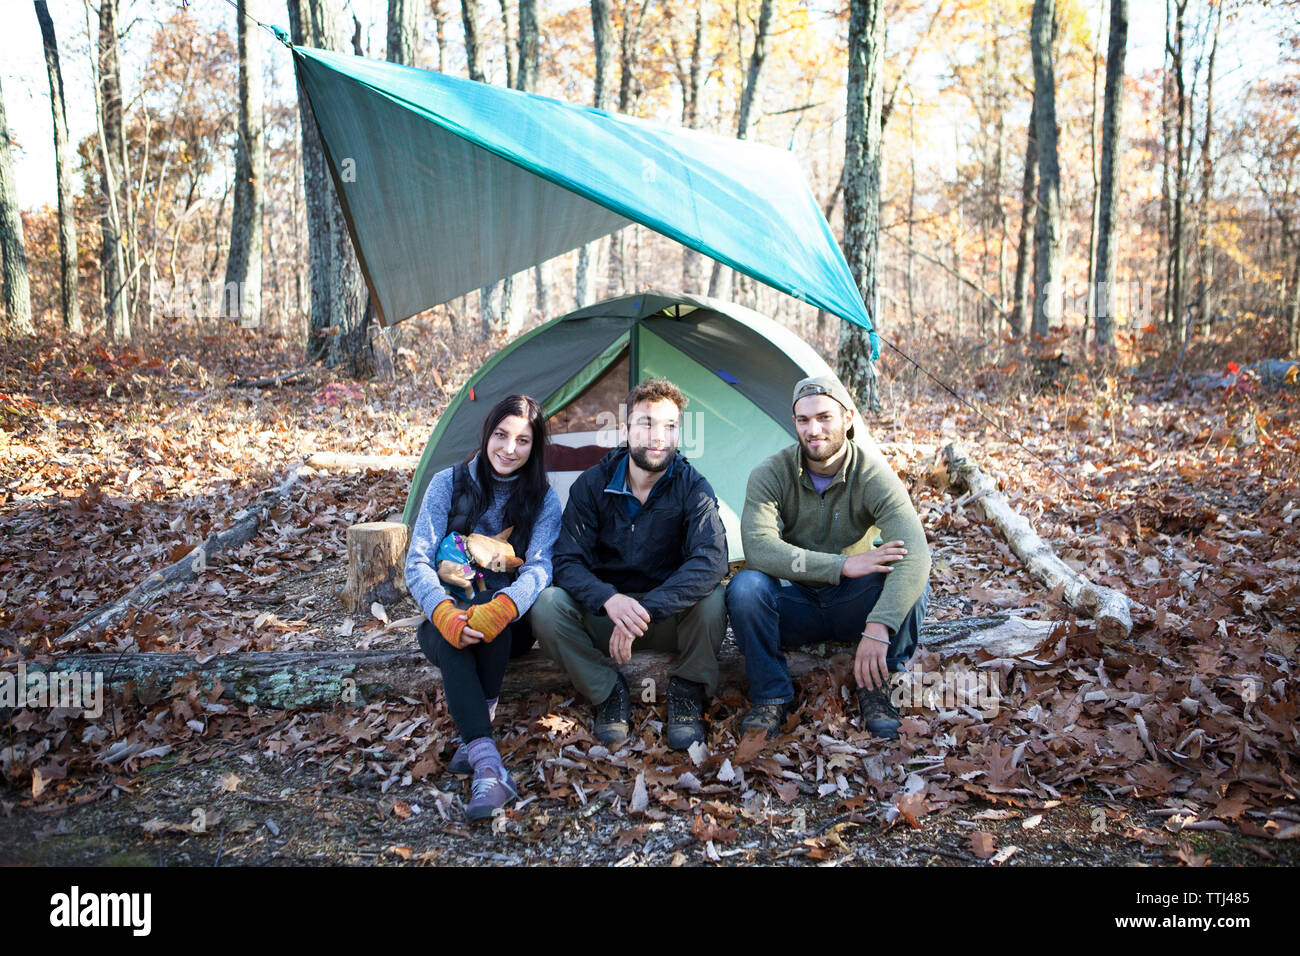 Portrait of friends sitting on fallen tree trunk by tent in forest Stock Photo